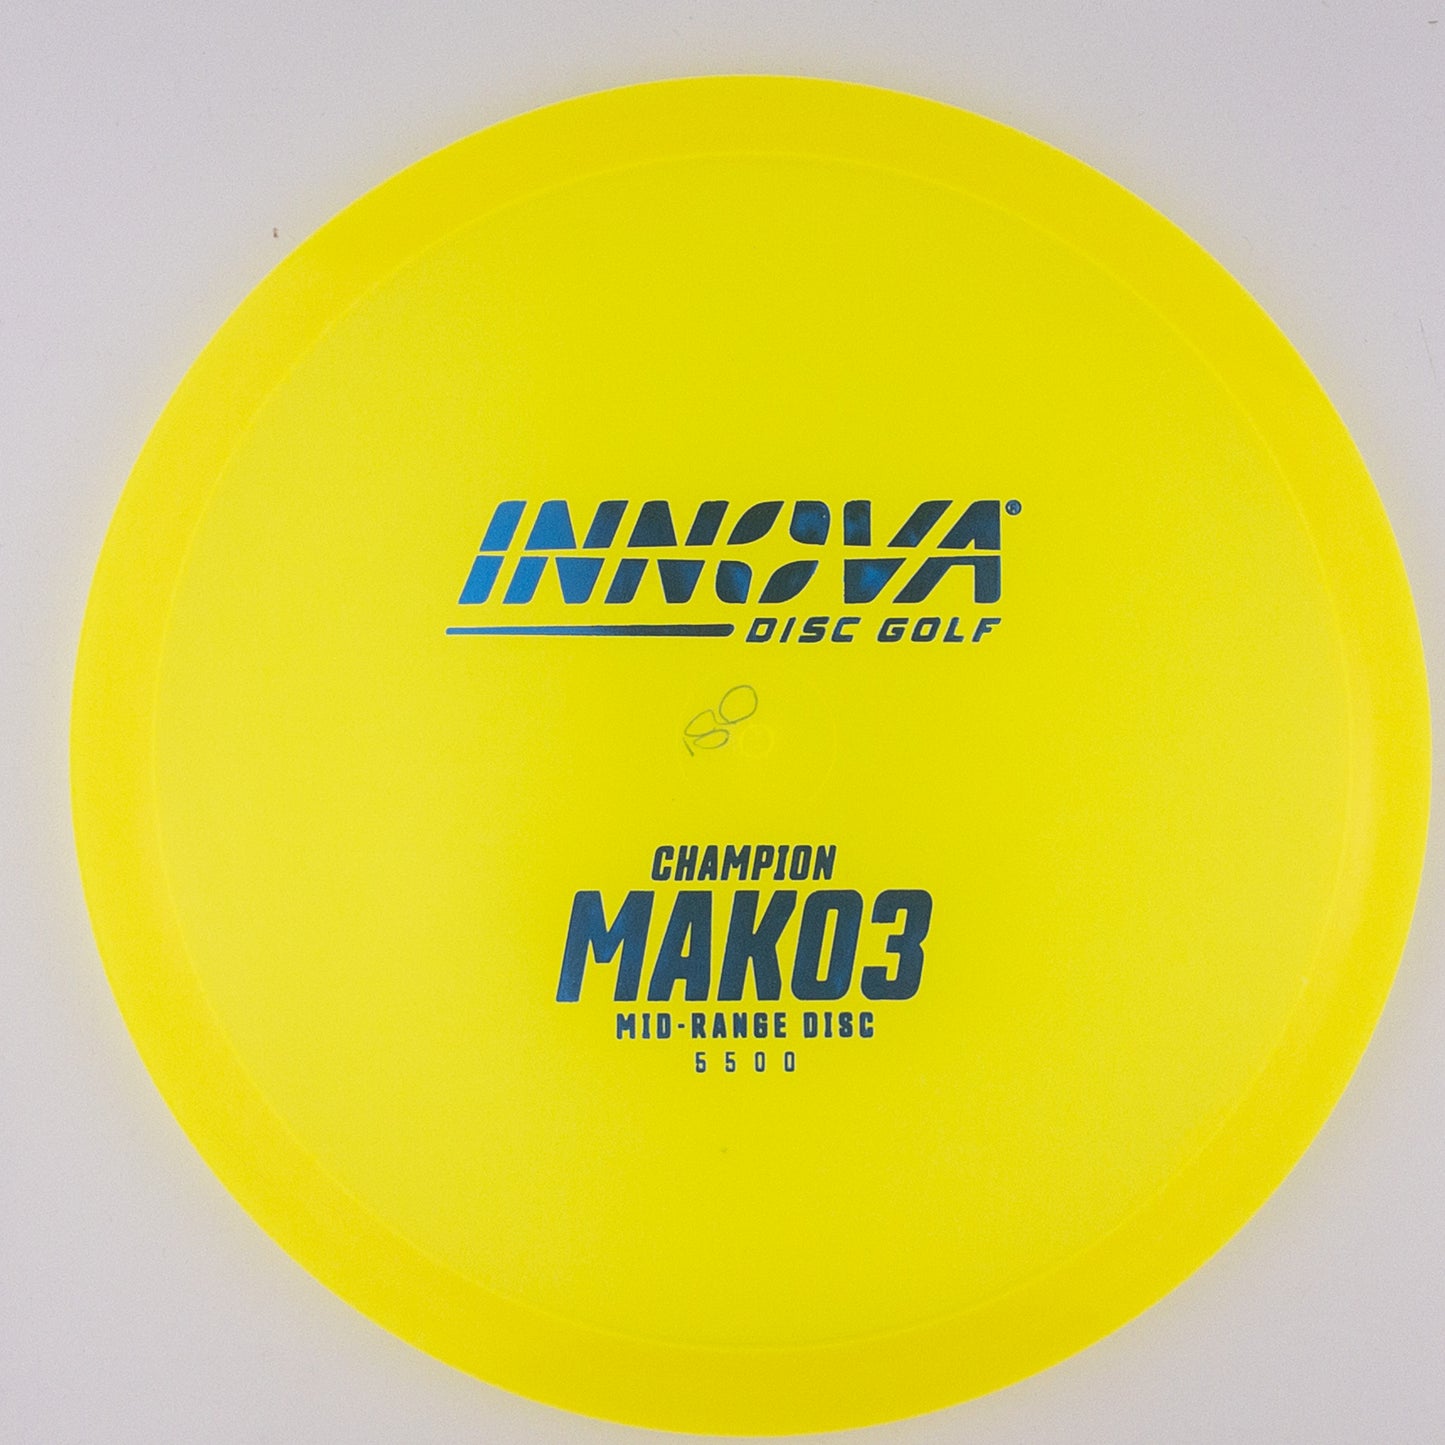 Innova Champion Mako3